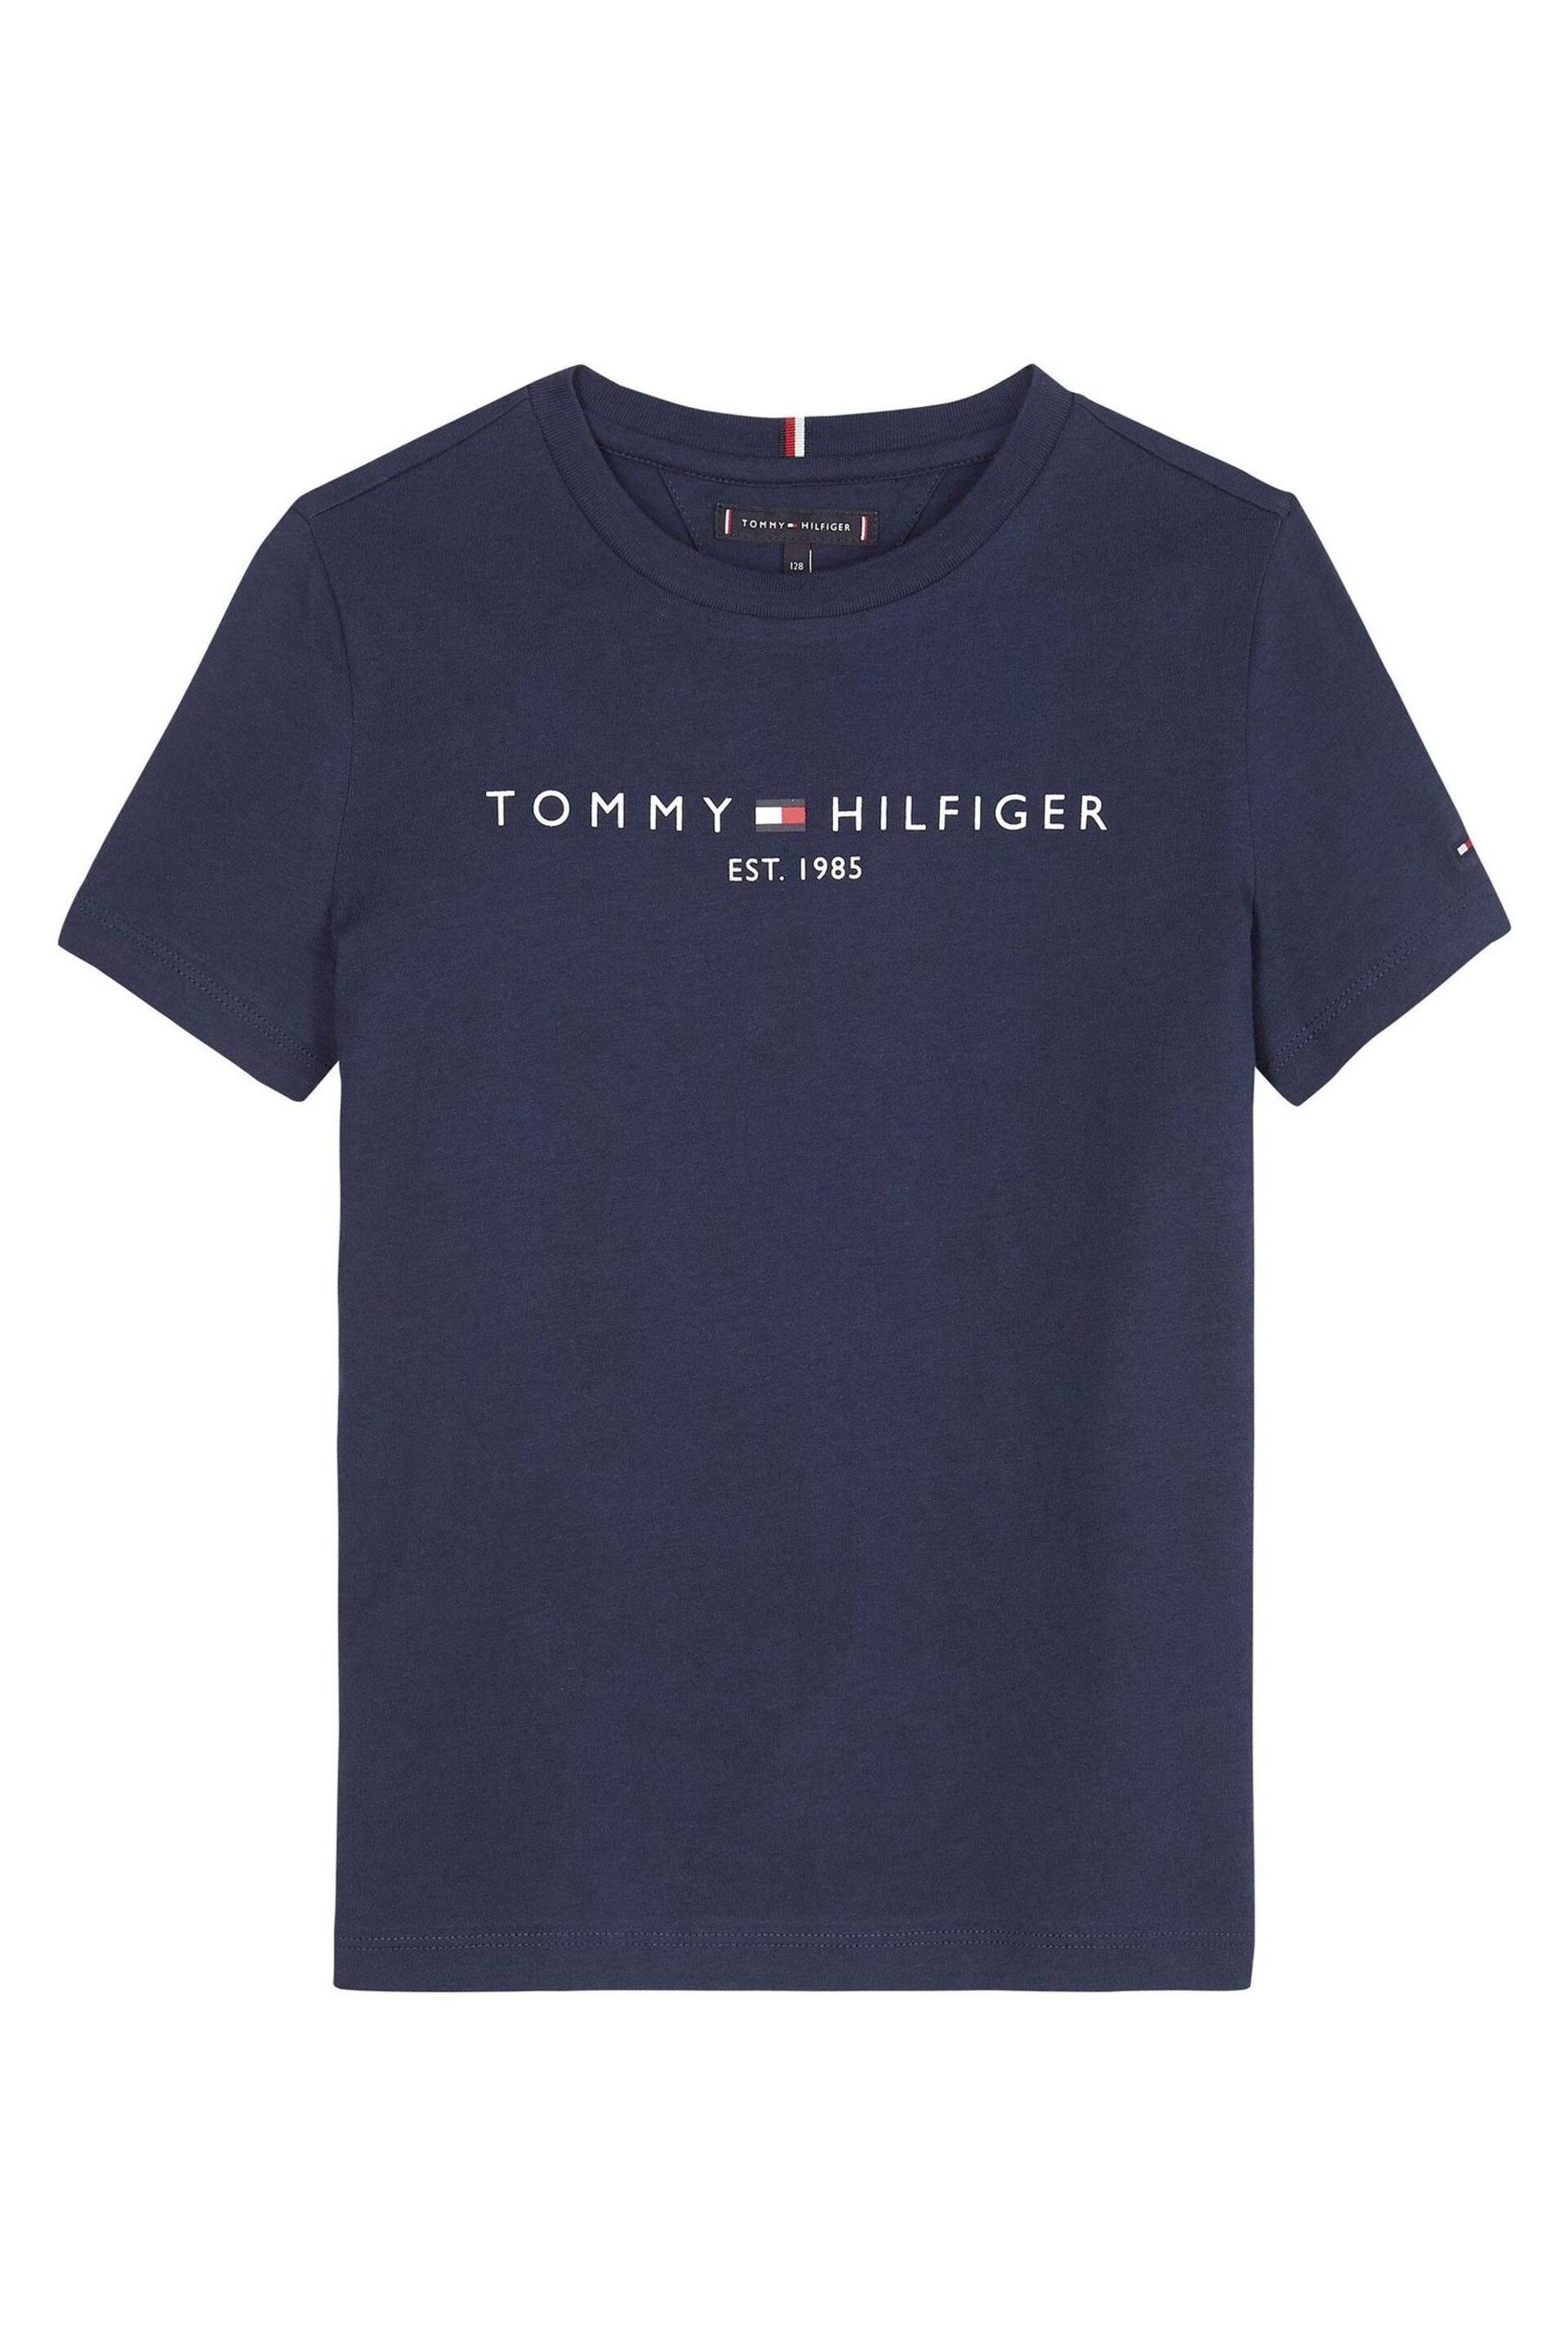 Tommy Hilfiger Blue Essential T-Shirt - Image 1 of 2